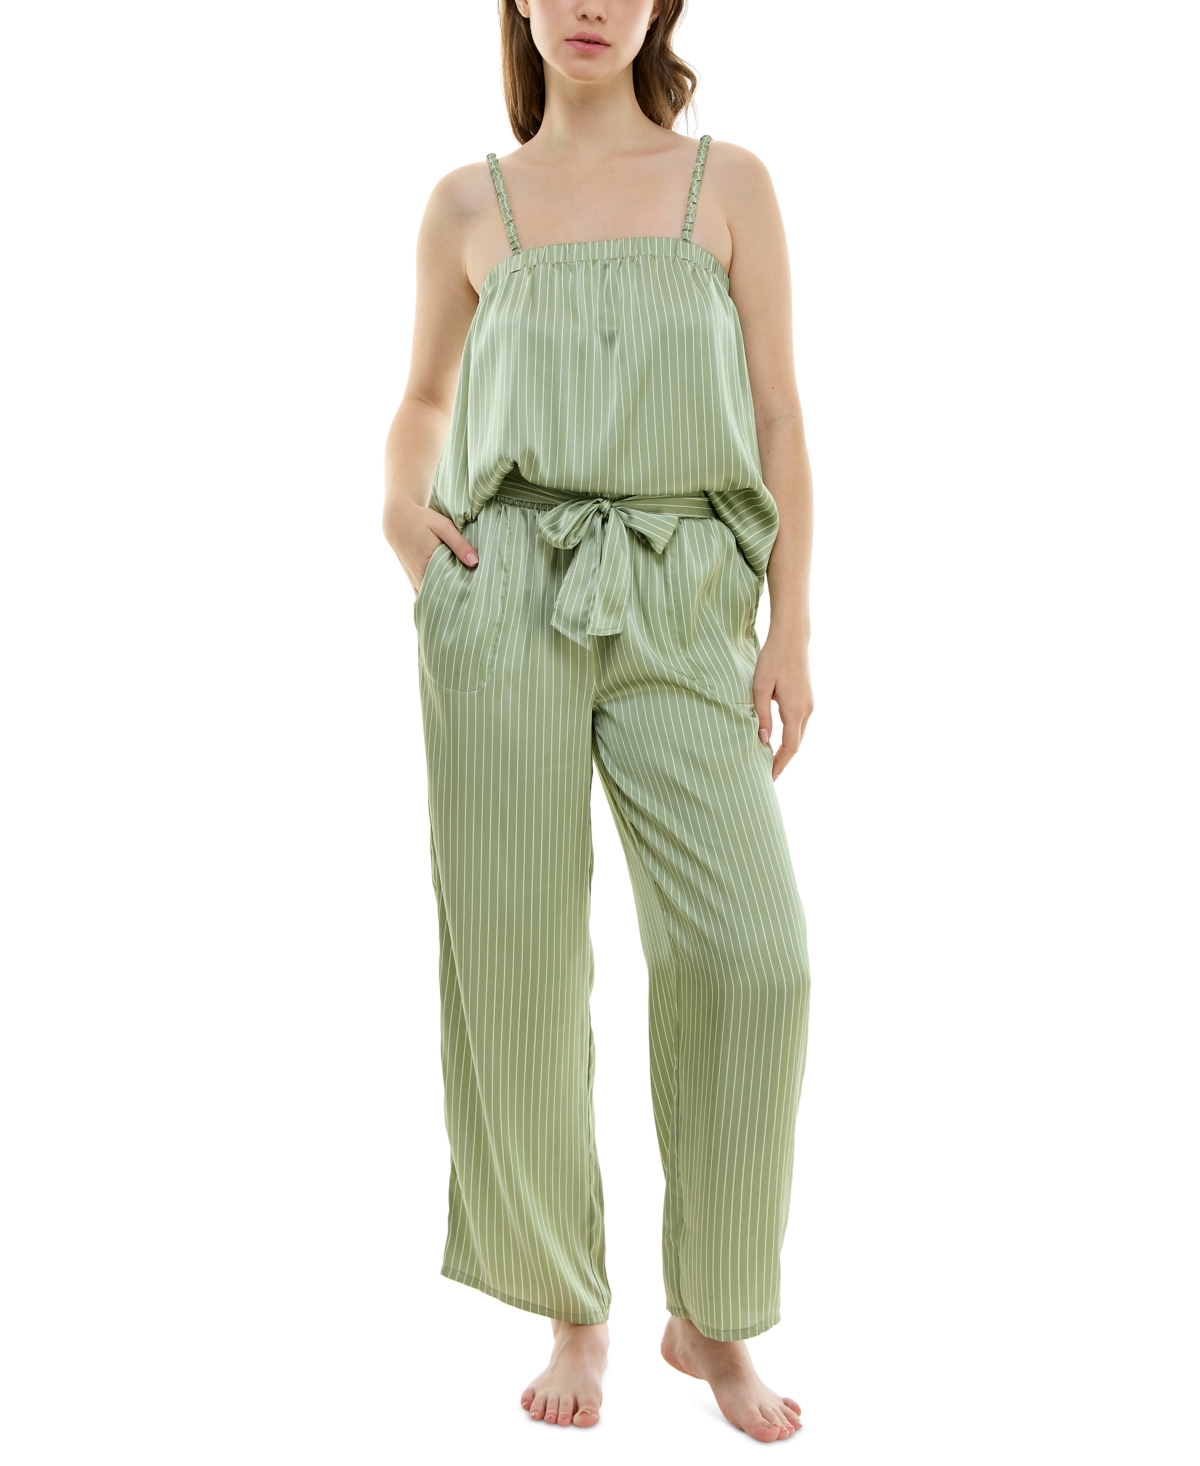 Women's 2-Pc. Satin Lace-Trim Pajamas Set - Tinsel Stripe